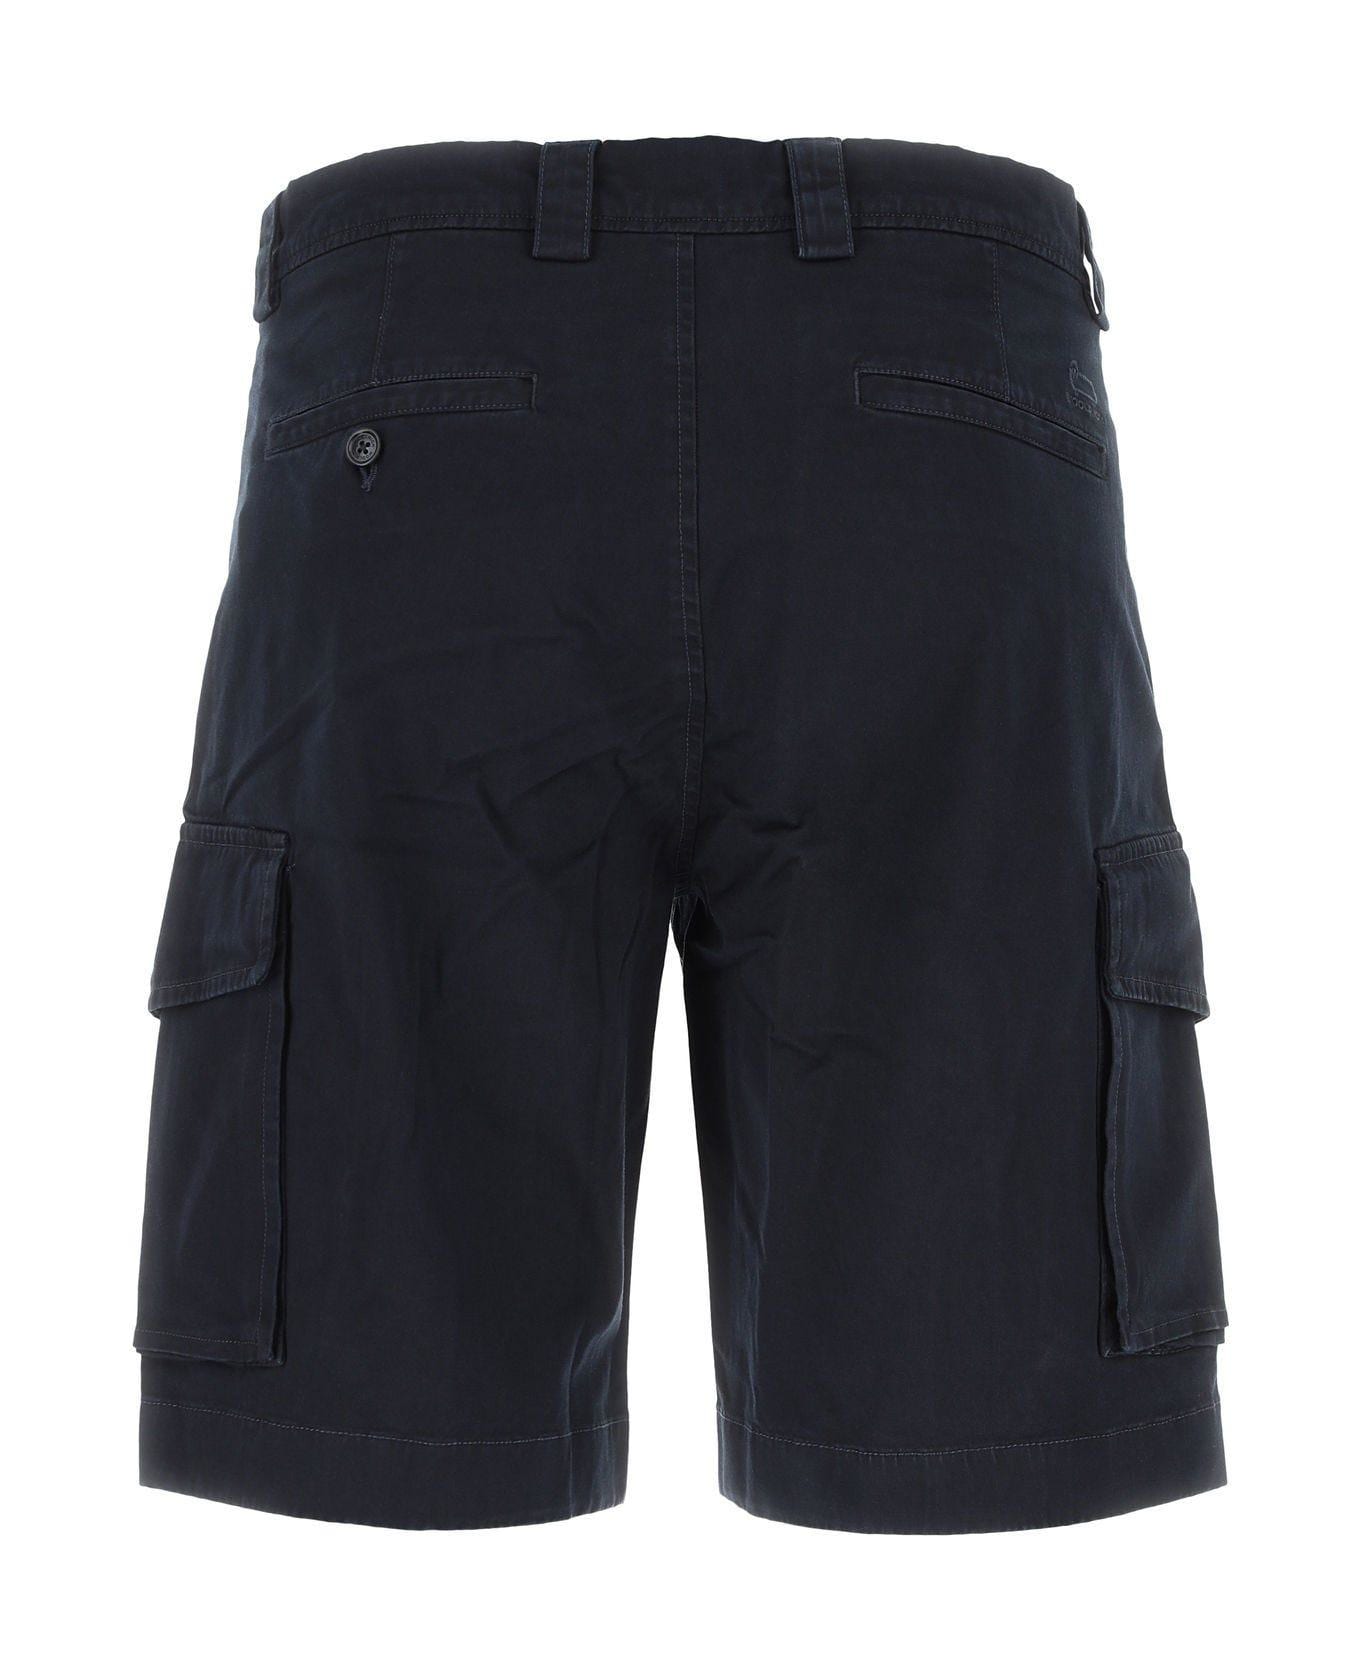 Woolrich Navy Blue Stretch Cotton Bermuda Shorts - NAVY ショートパンツ